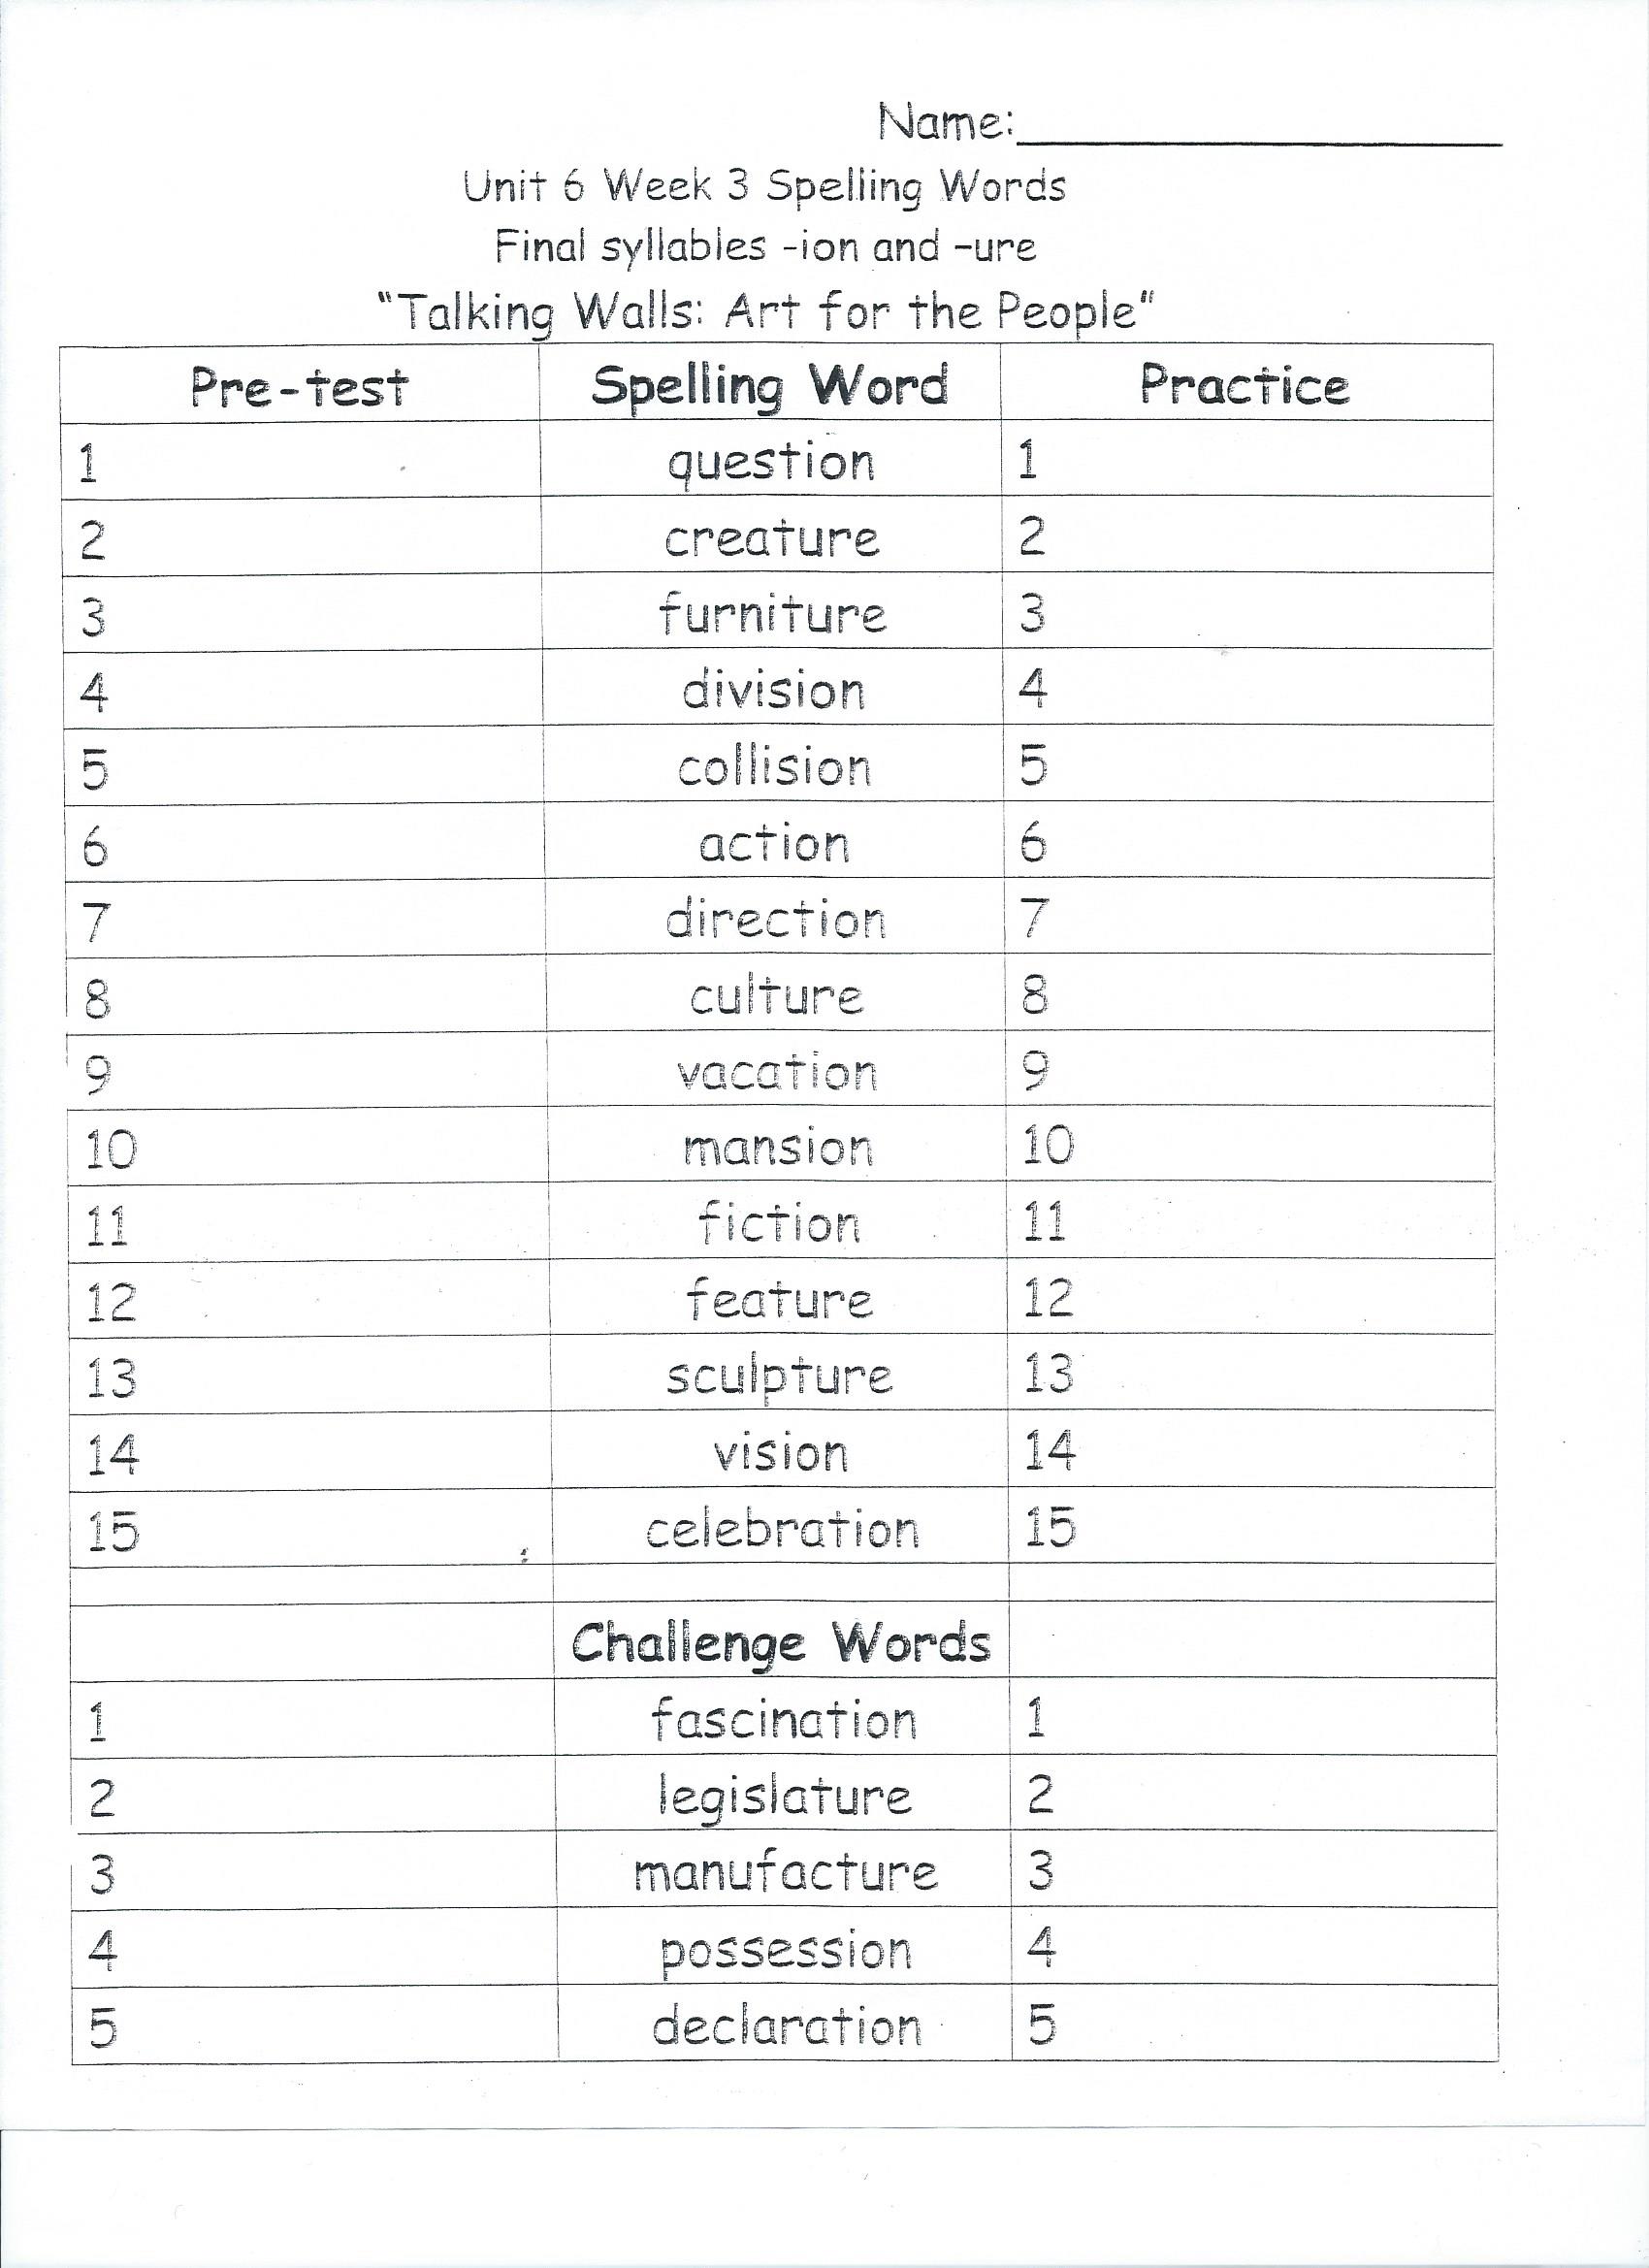 Spelling Lists - Mrs. Buffington's 3rd Grade